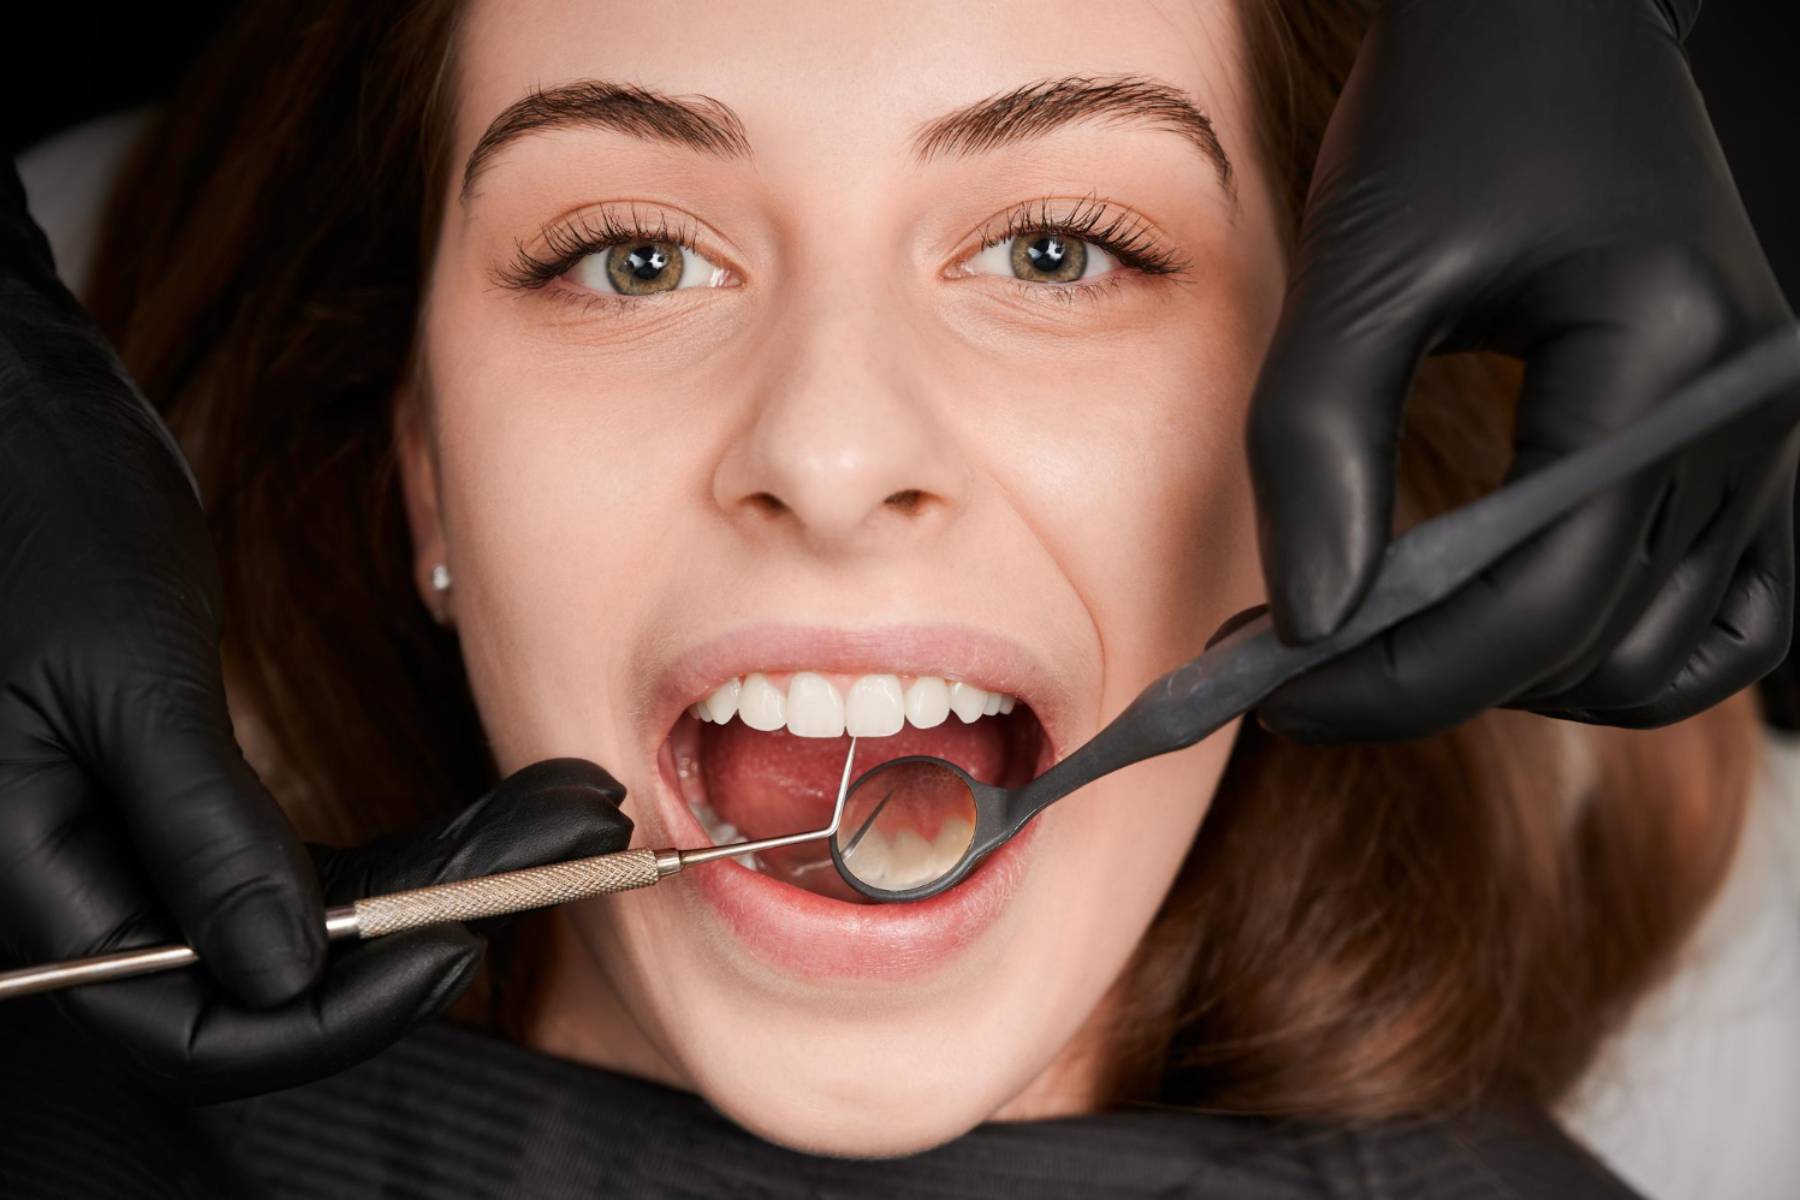 dentist hands sterile gloves examining woman teeth